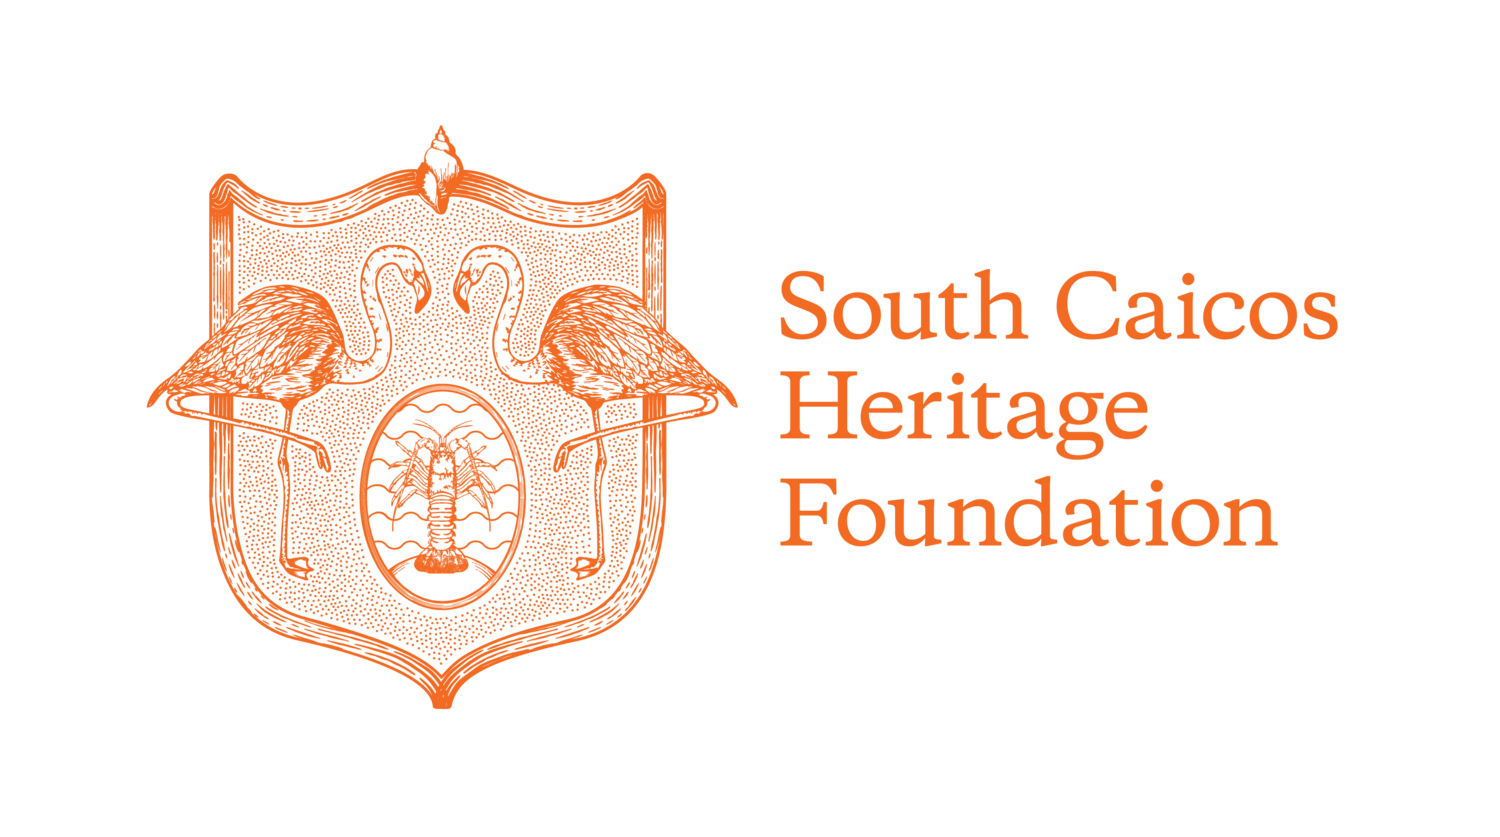 South Caicos Heritage Foundation